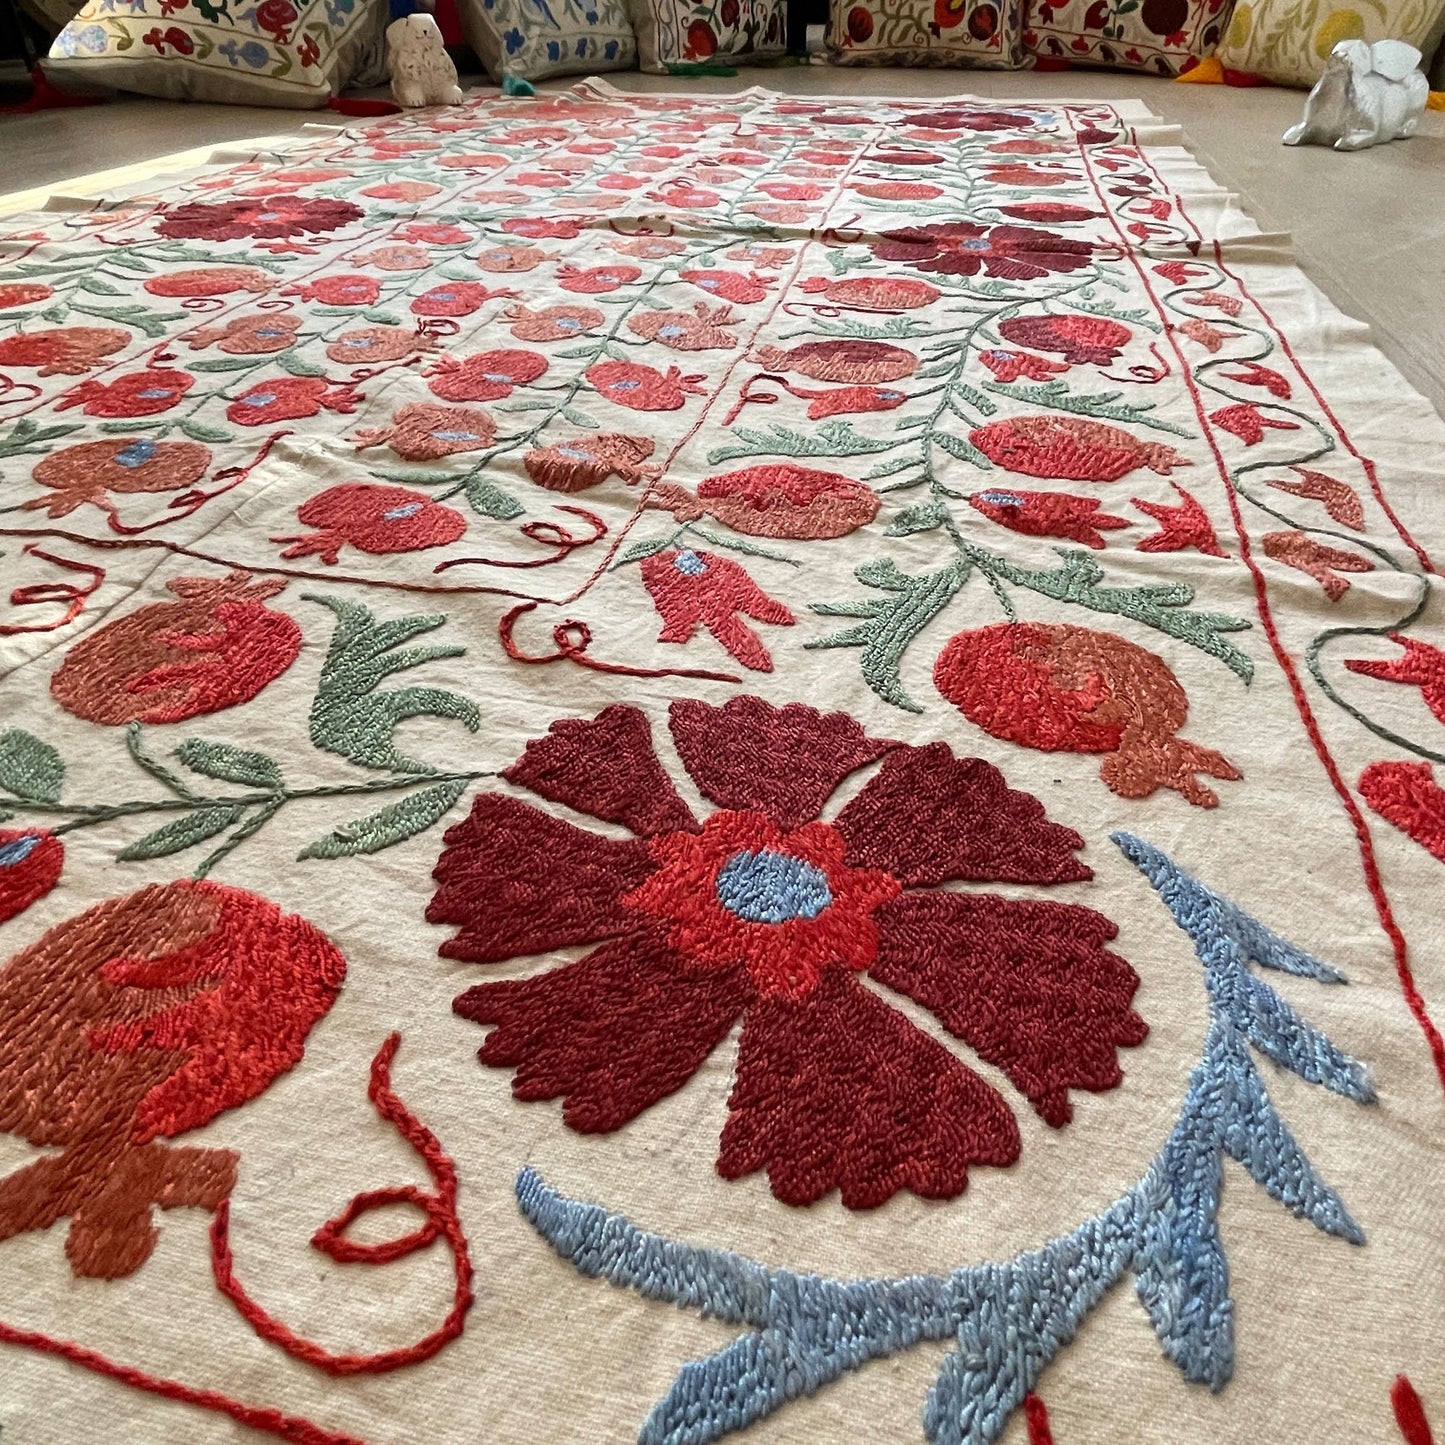 Uzbeki Suzani Hand Embroidered Textile Wall Hanging | Home Décor | Runner | 100cm x 150cm SUZ0410009 - Wildash London